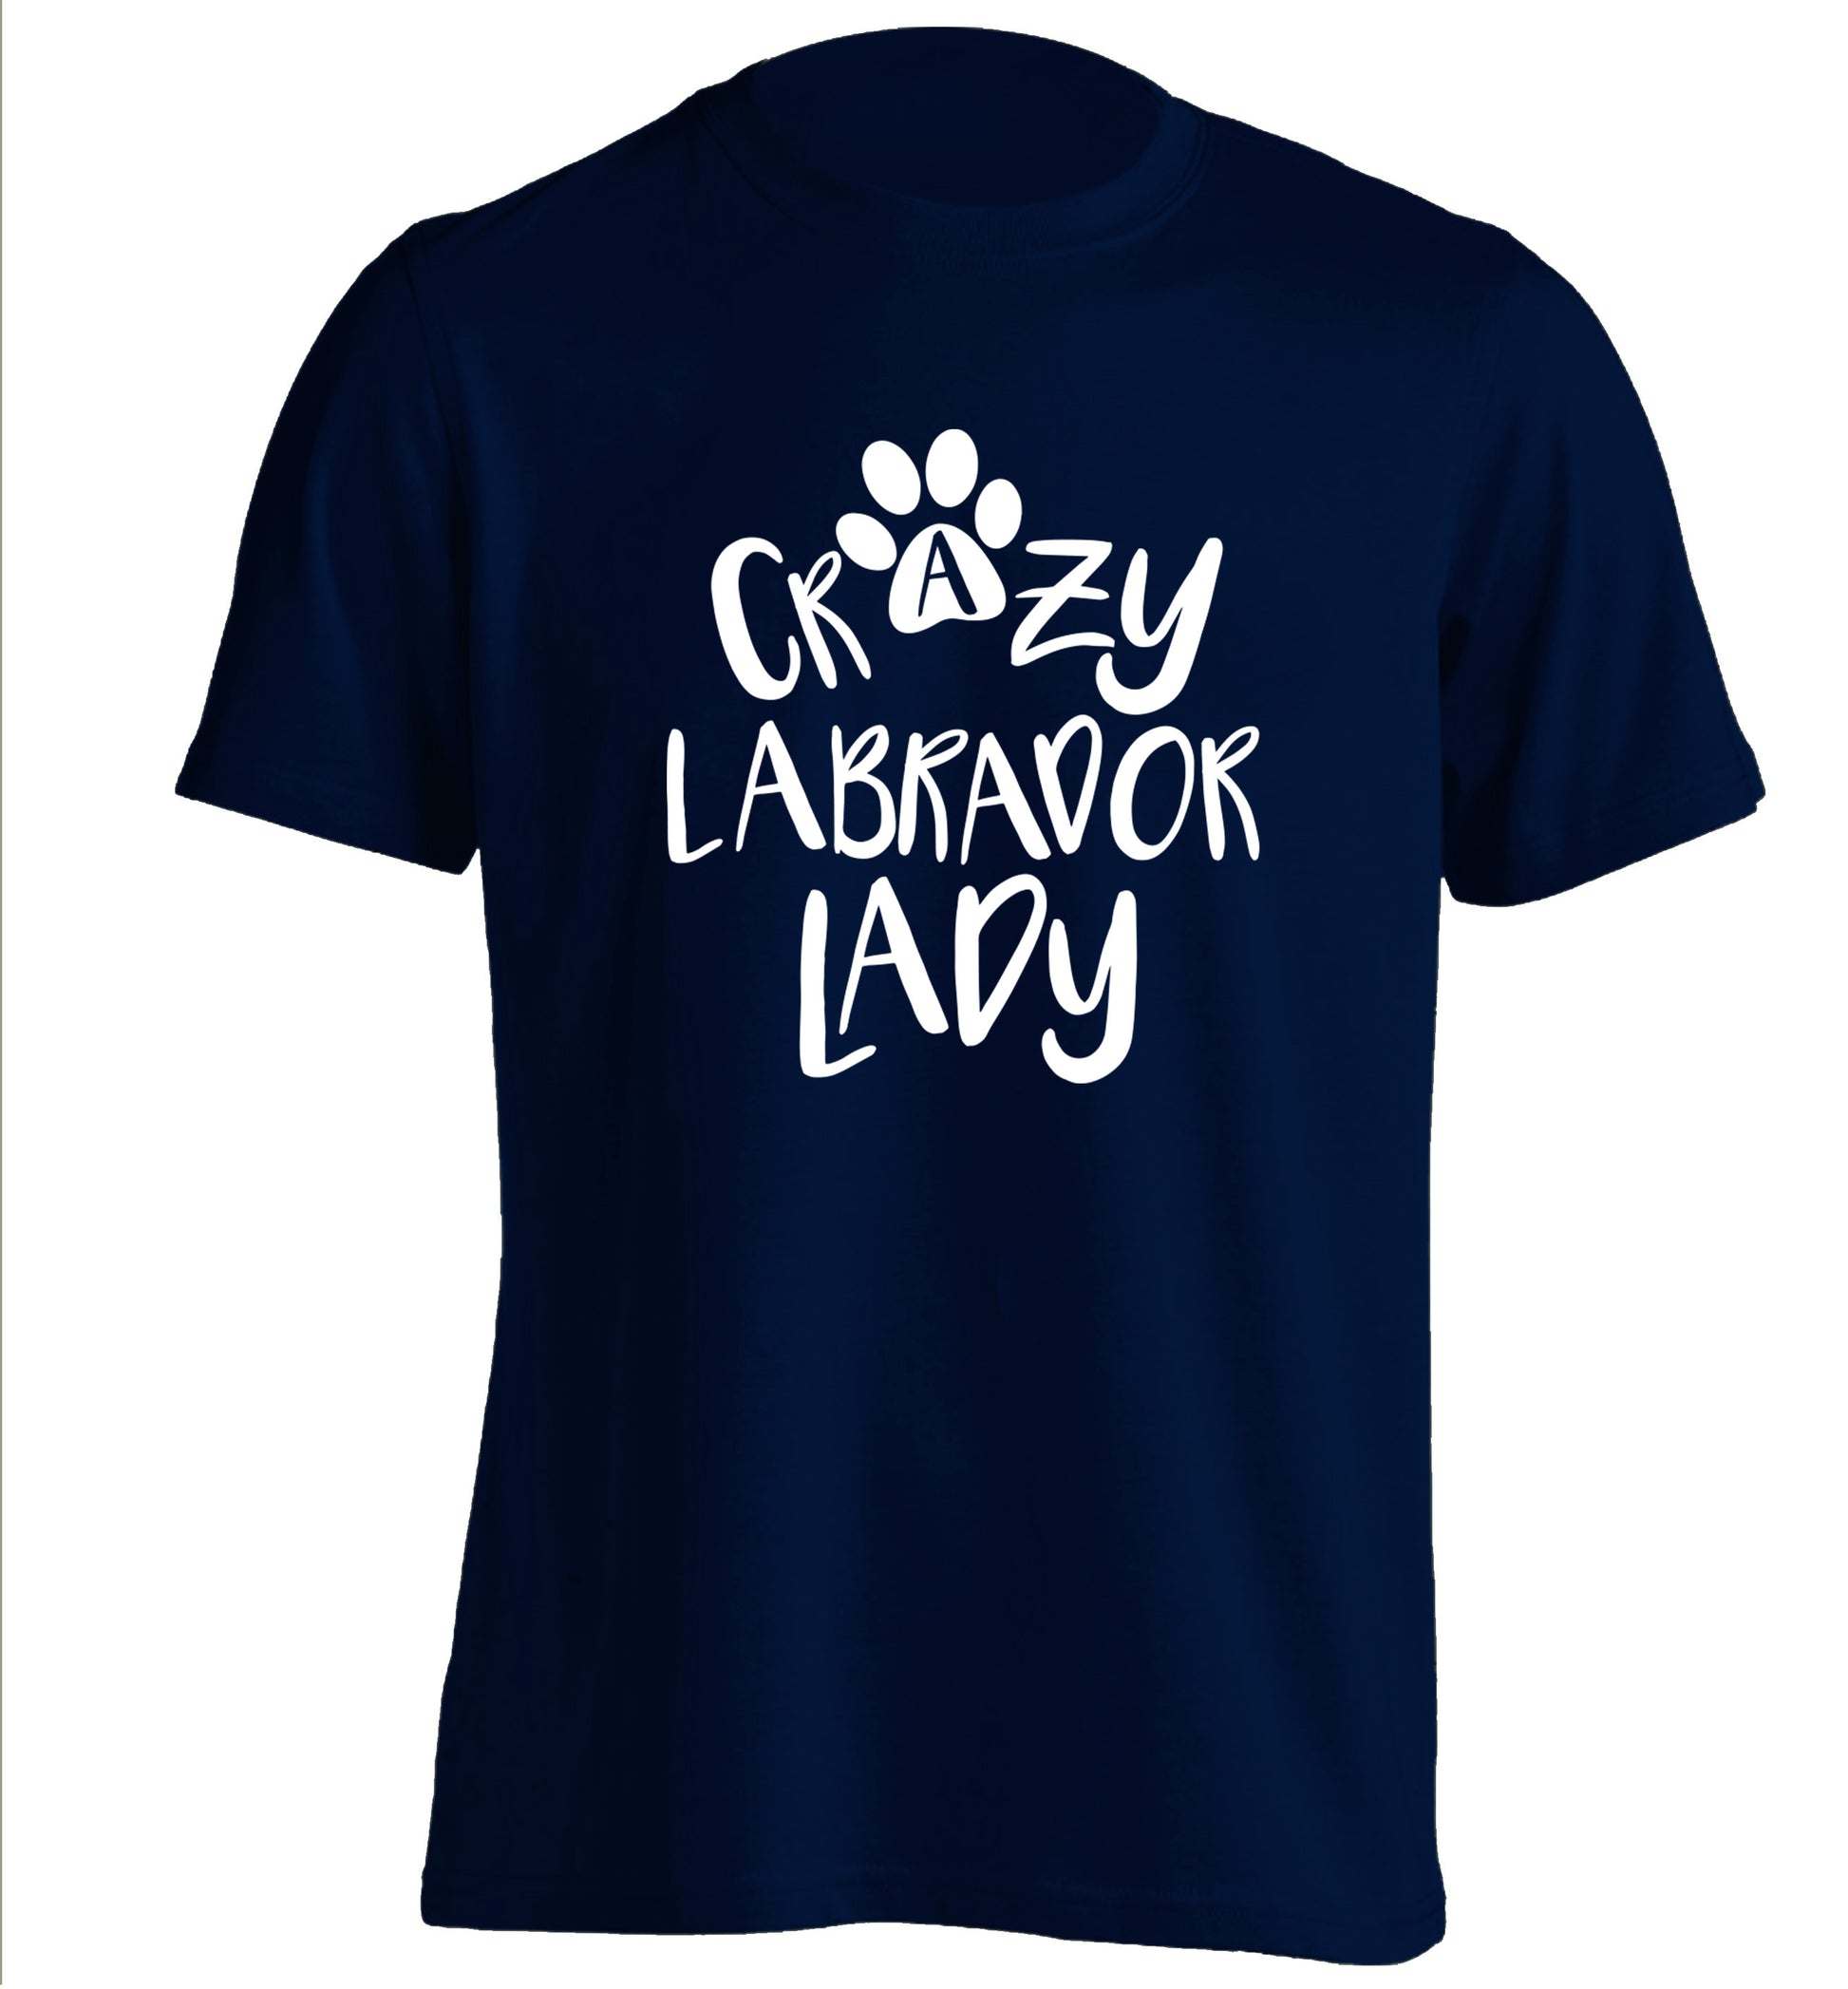 Crazy labrador lady adults unisex navy Tshirt 2XL